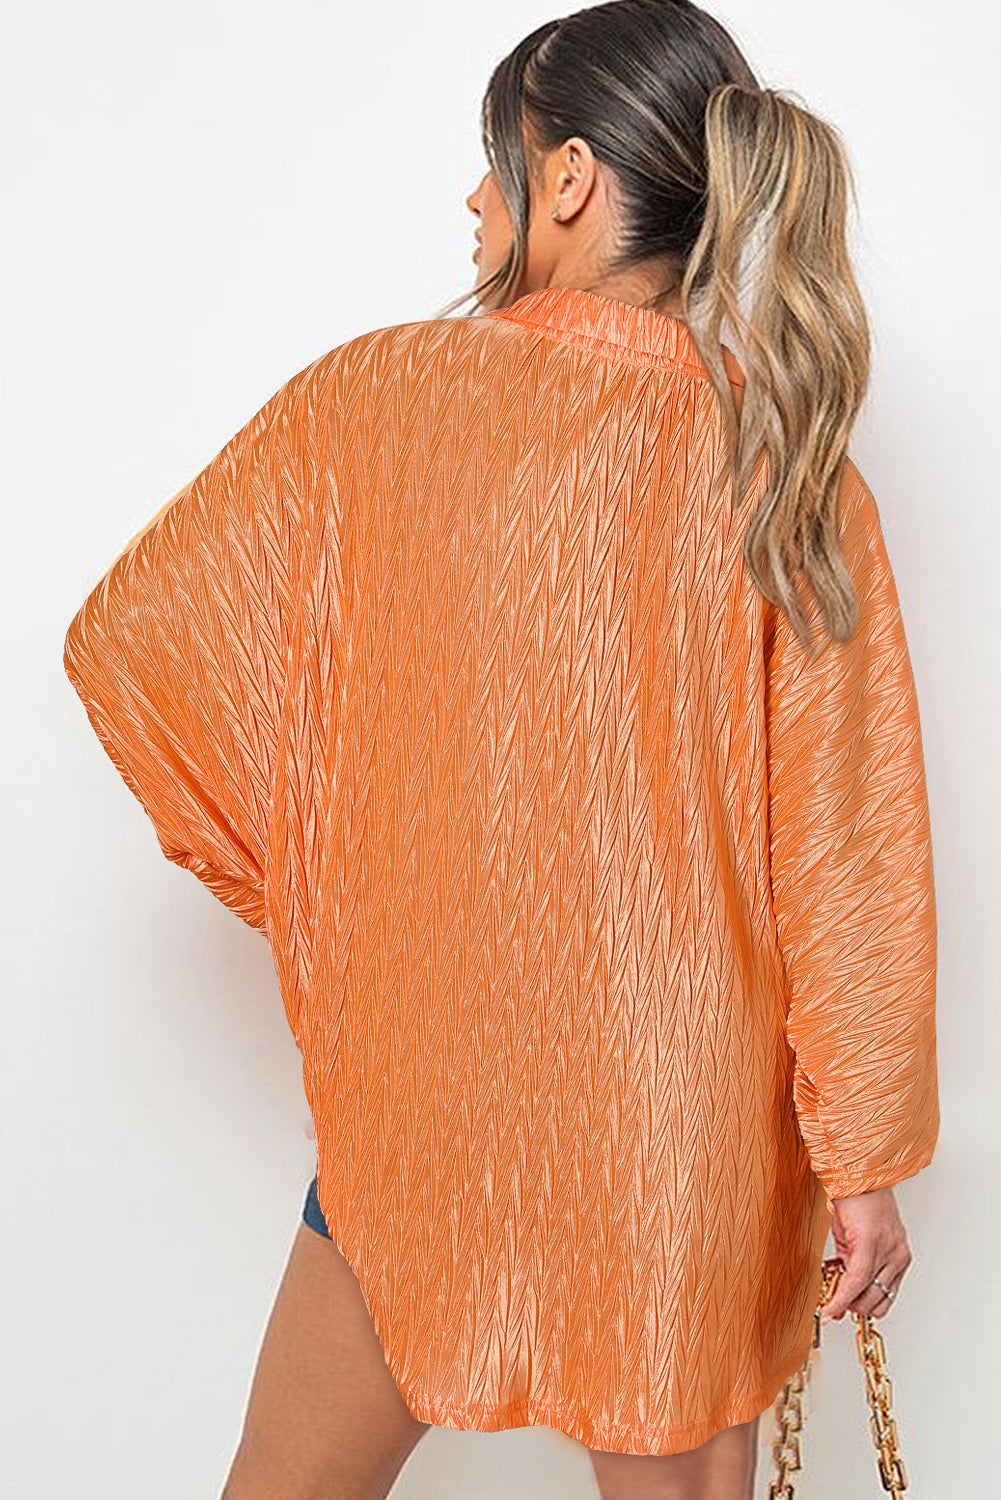 Orange Textured Button Up Batwing Sleeve Shirt